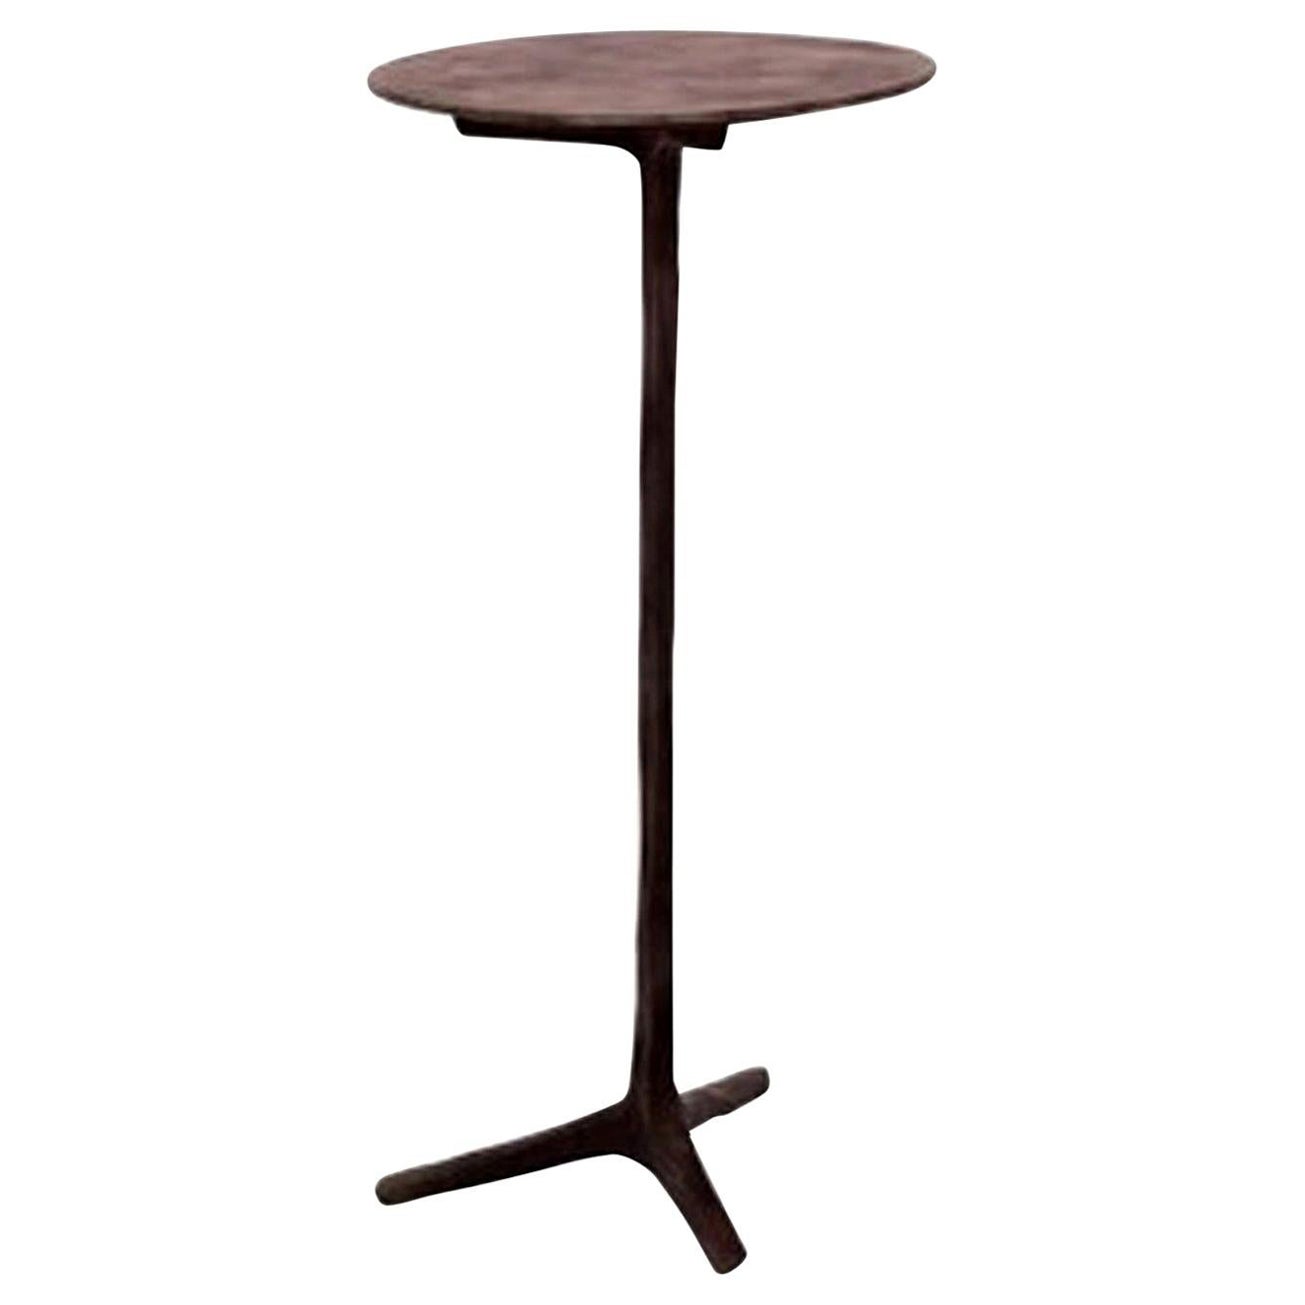 Piet Boon Klink side table in Dark Bronze For Sale